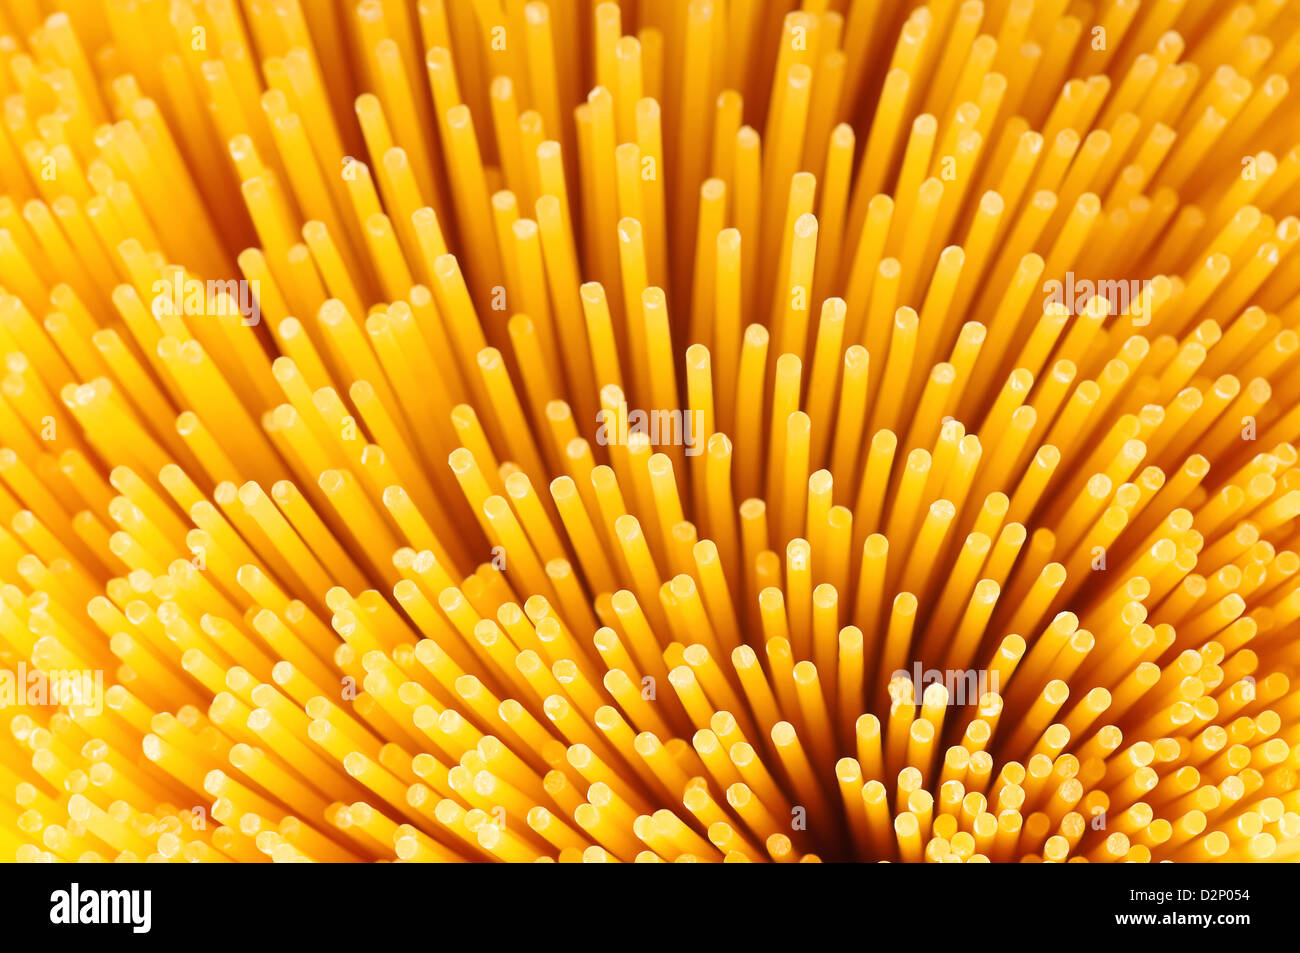 Close-up of spaghetti italien non cuites longtemps background Banque D'Images